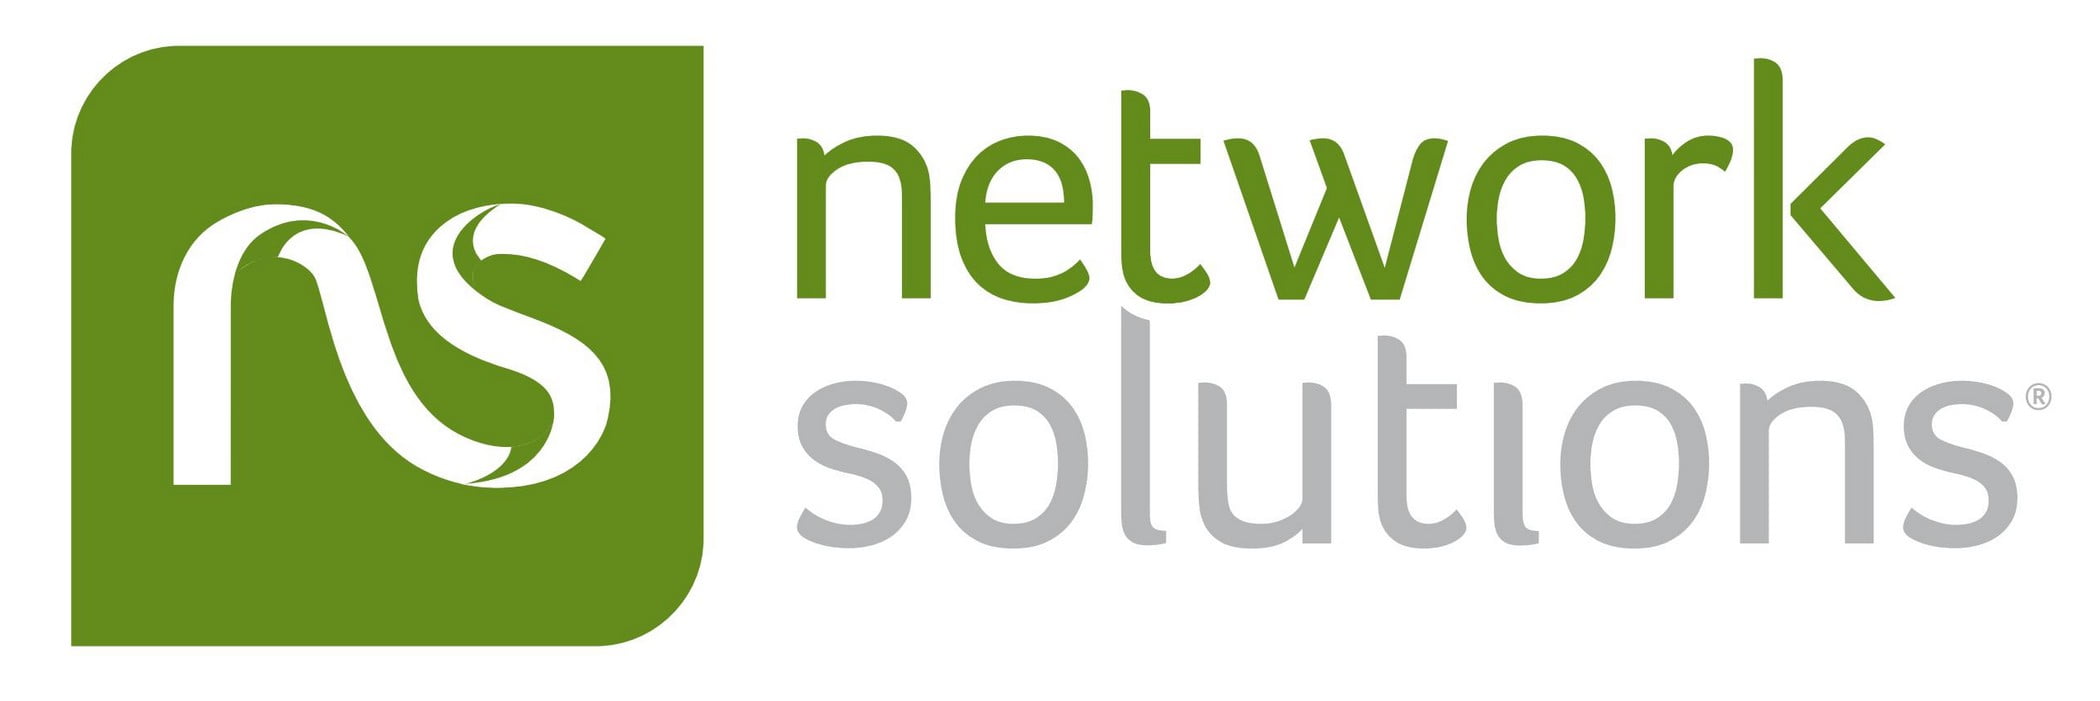 Network Solutions-WeblifyAi's All Useful Tools